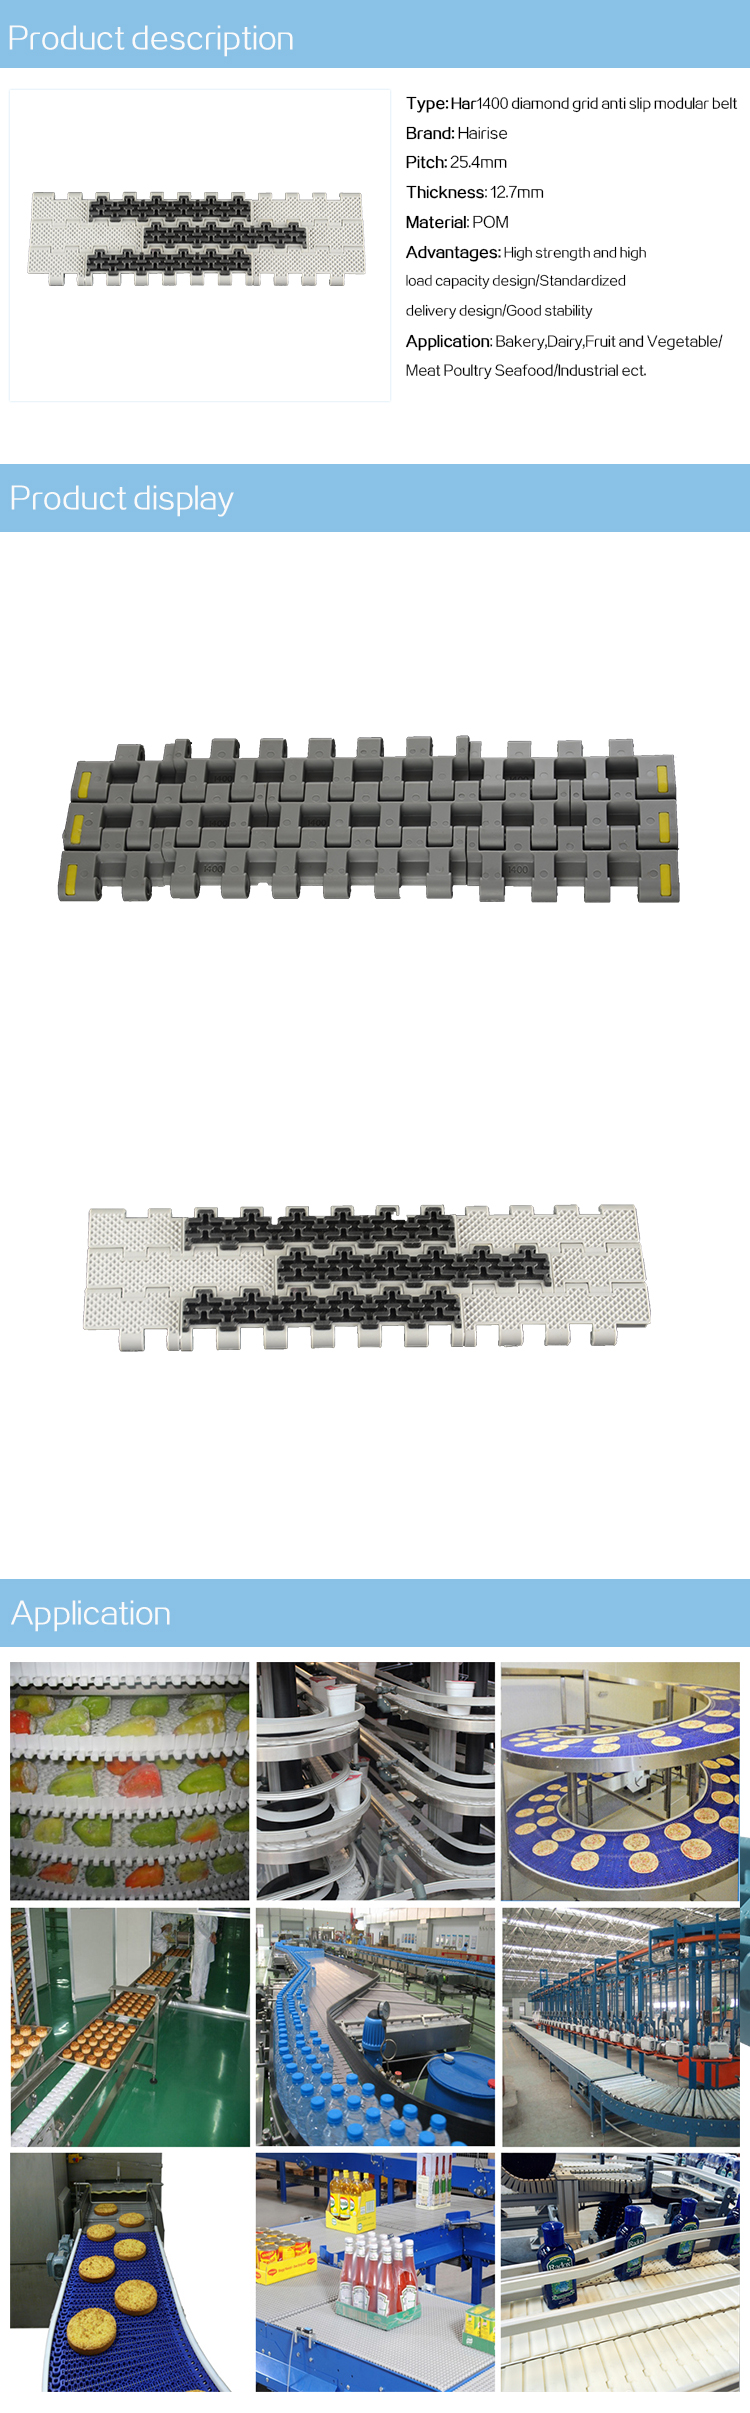 1400 diamond grid modular belt.jpg